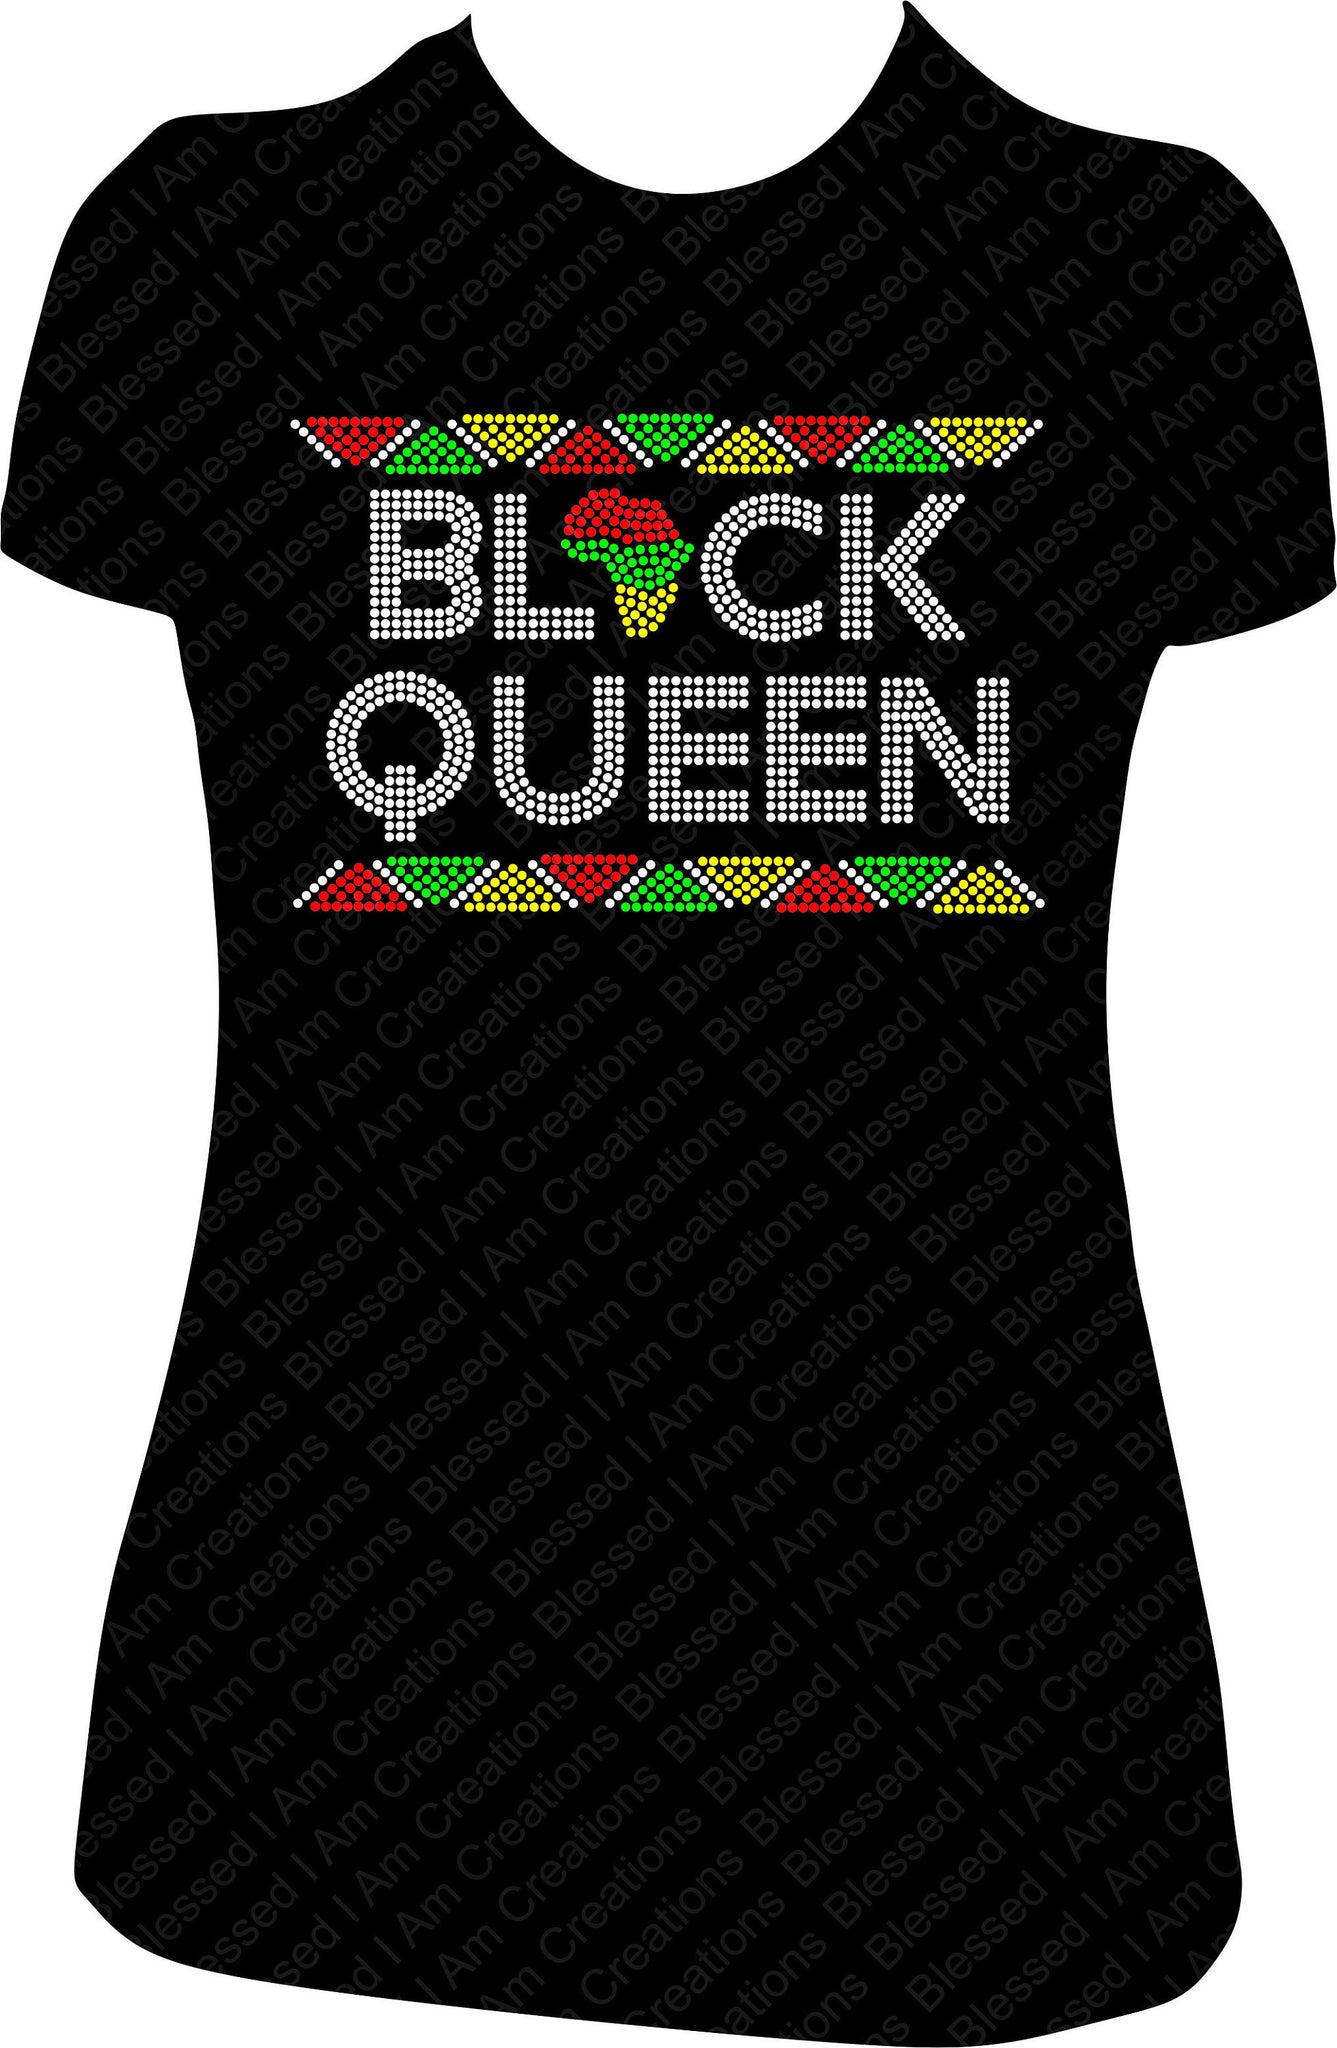 Black Queen Rhinestone Shirt Queen Bling shirt